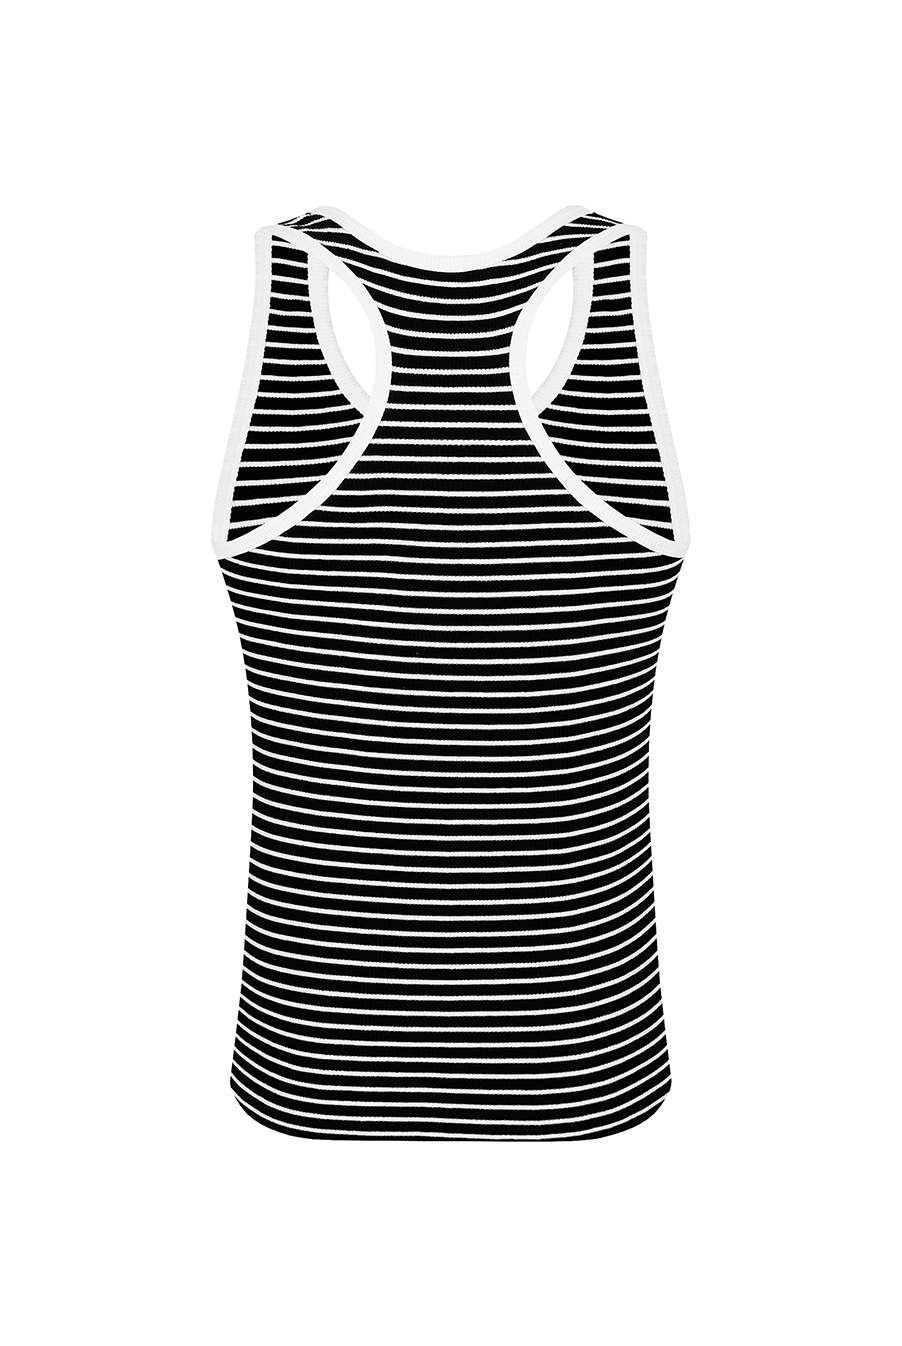 Stripe logo sleeveless - BLACK